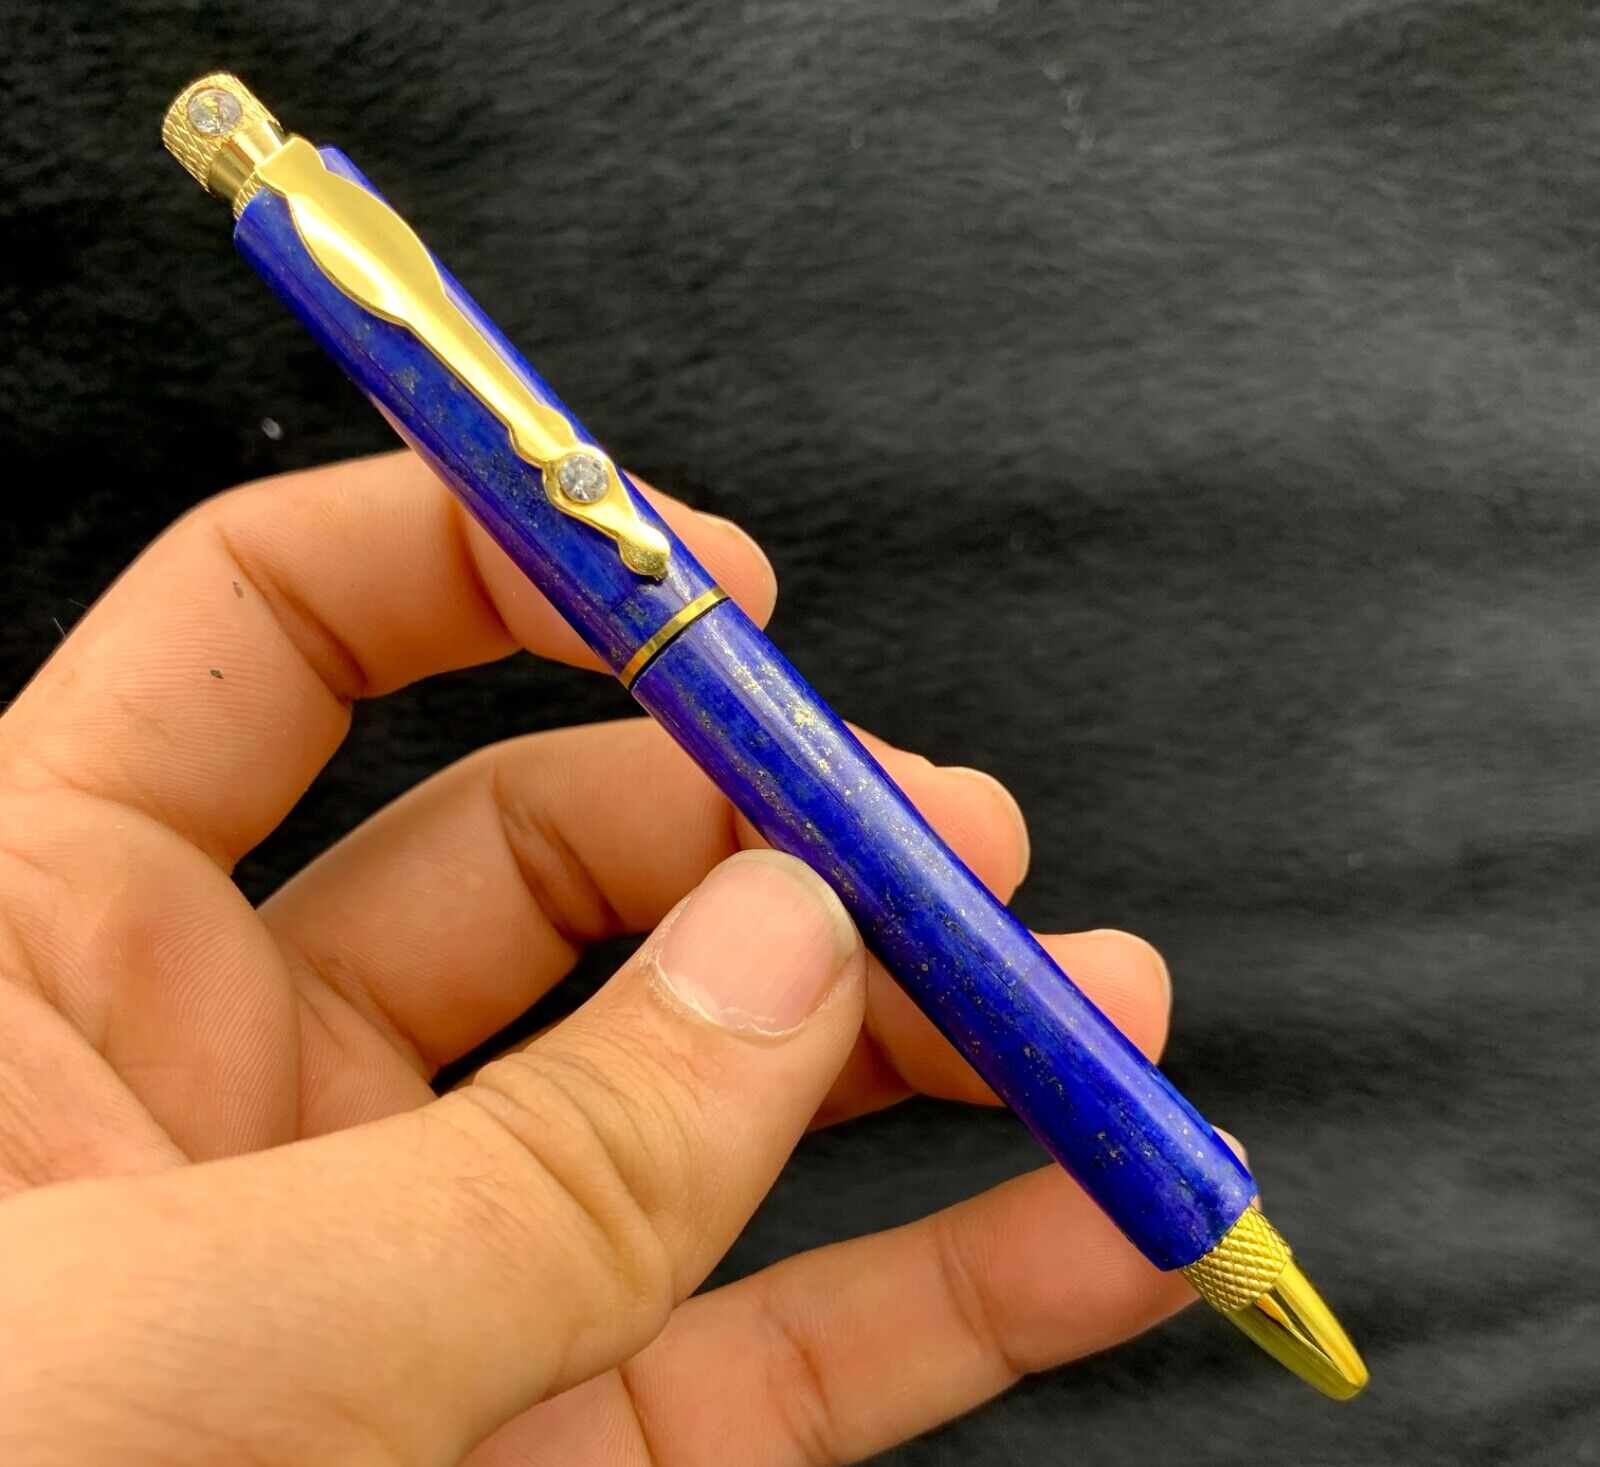 Amazing Quality of Lapiz Lazuli Pen (Handmade) from Afghanistan.